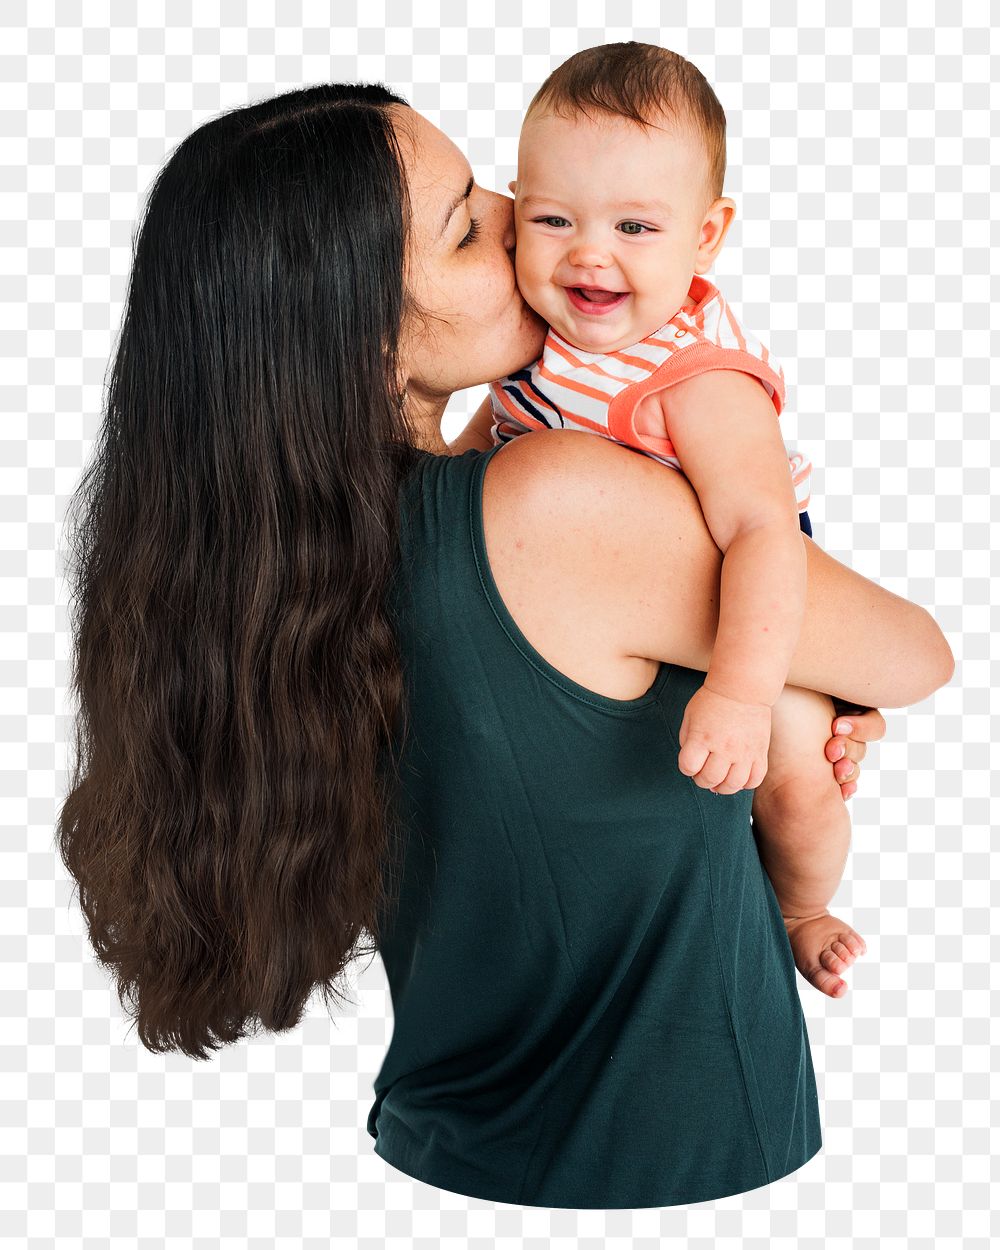 Mother & child png sticker, transparent background